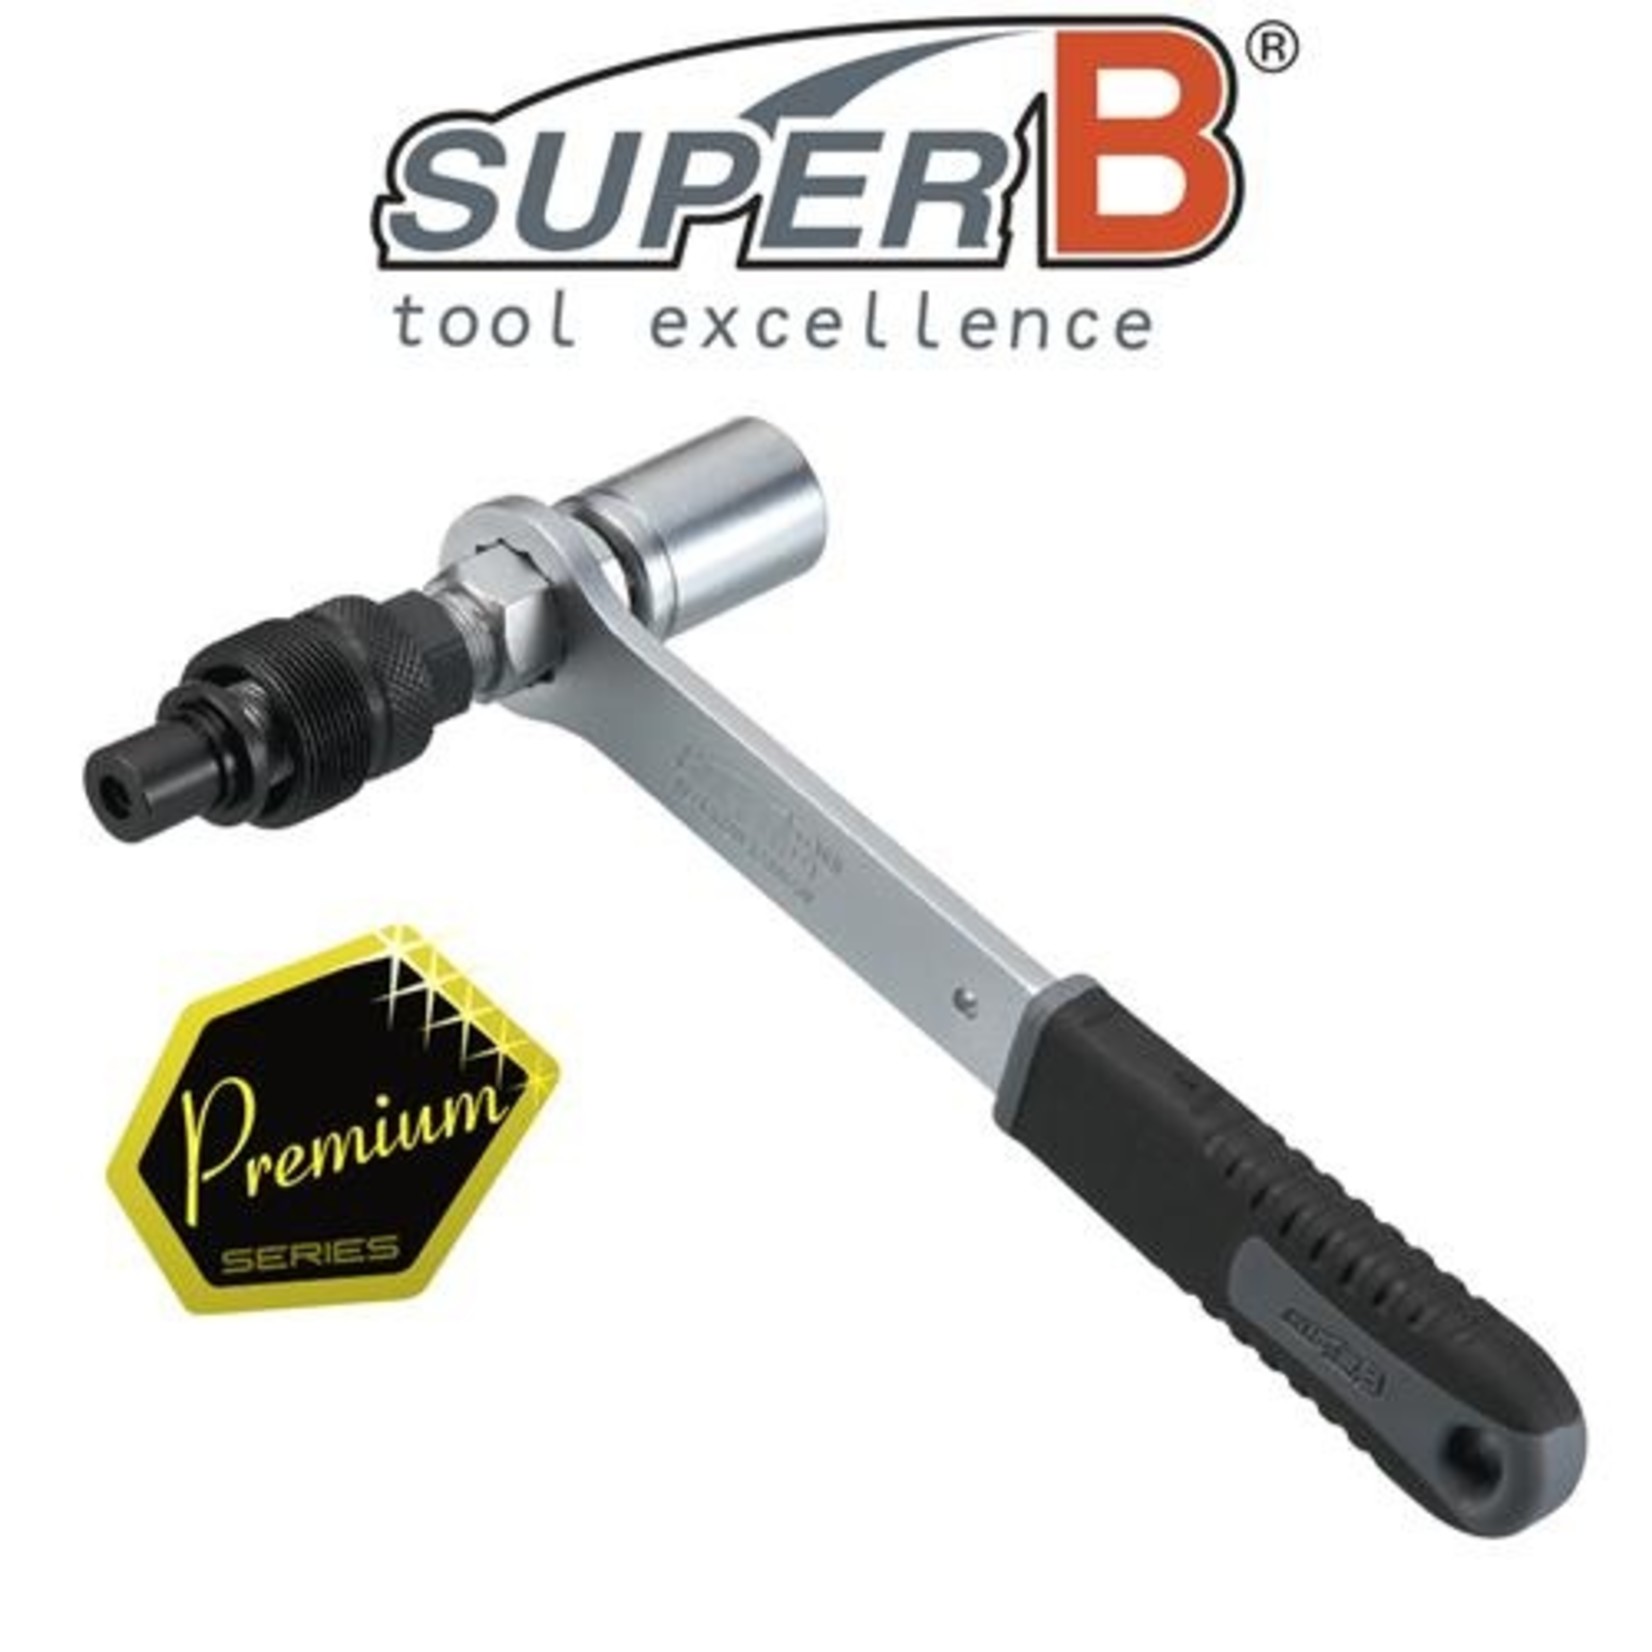 Super B SuperB Premium Series 2 in 1 Cotterless Crank Tool - Bike Tool